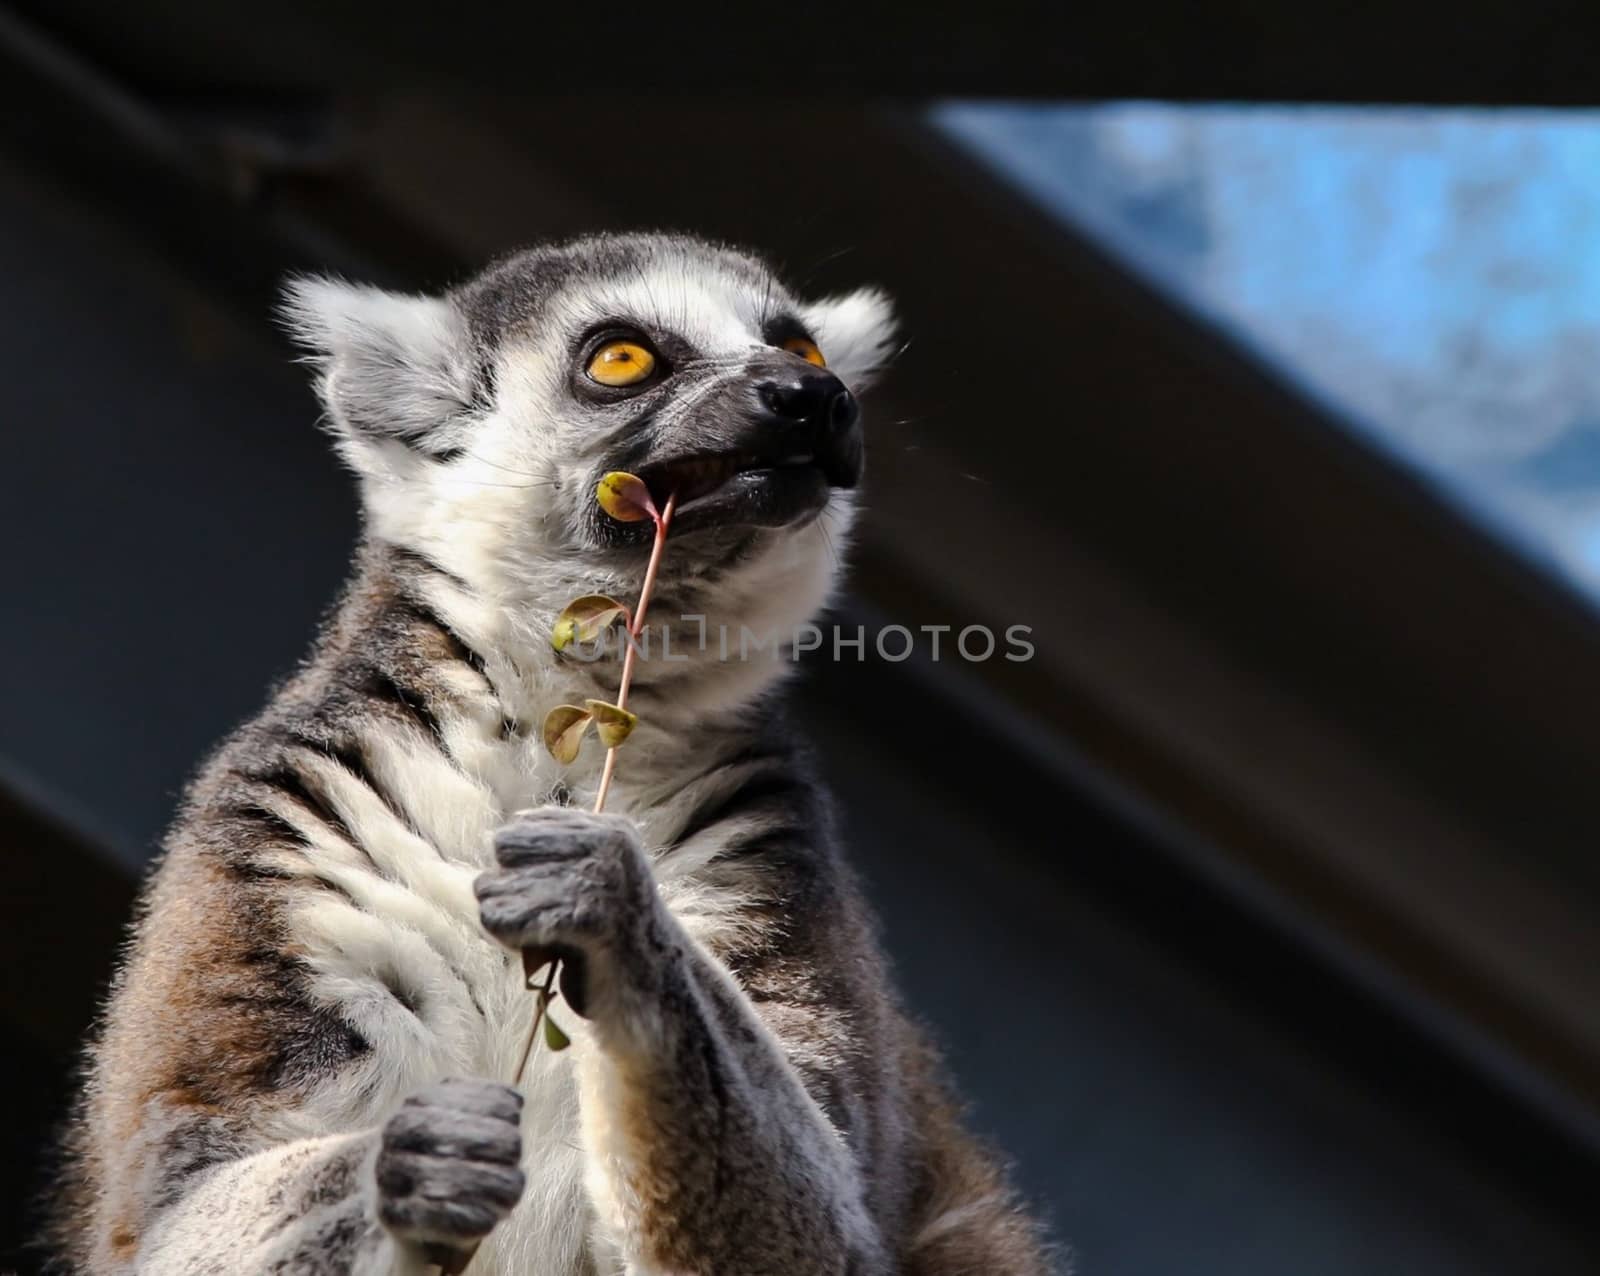 A lemur (Lemuroidea) soaks up the sun in Kobe, Japan. by blueandrew8000@hotmail.com